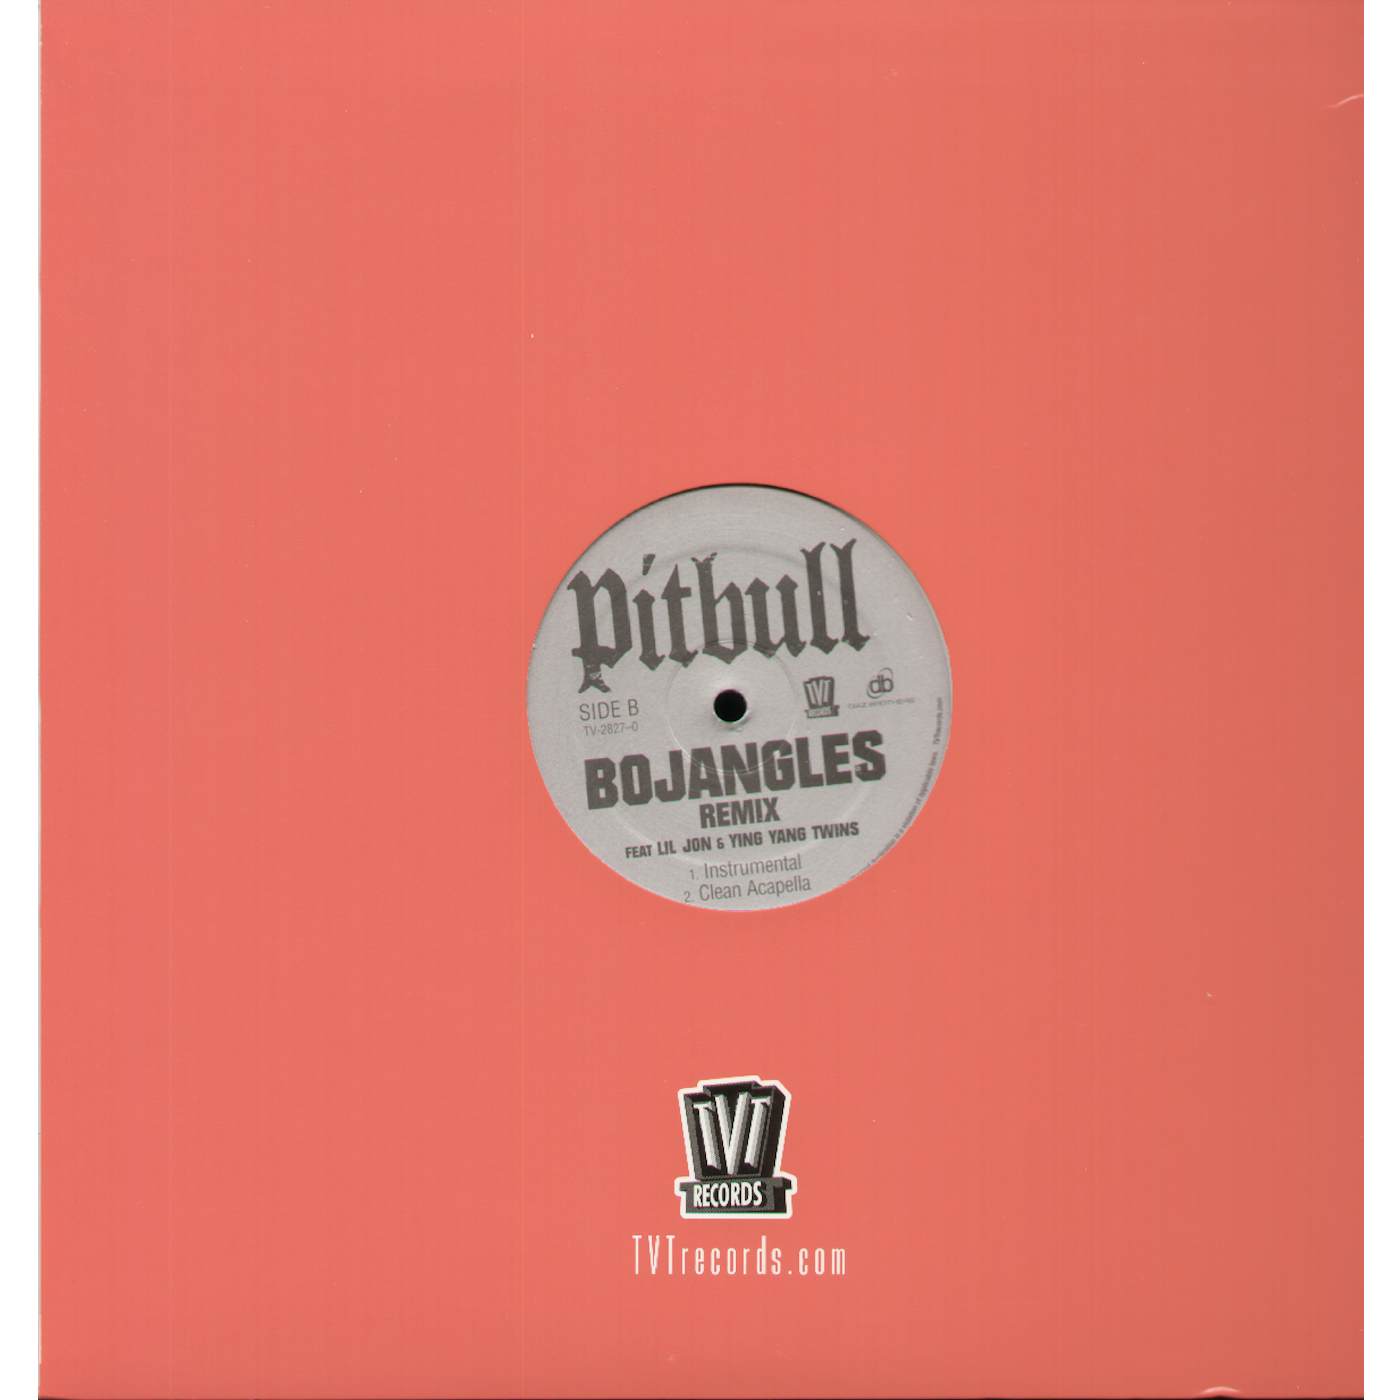 Pitbull BOJANGLES REMIX Vinyl Record